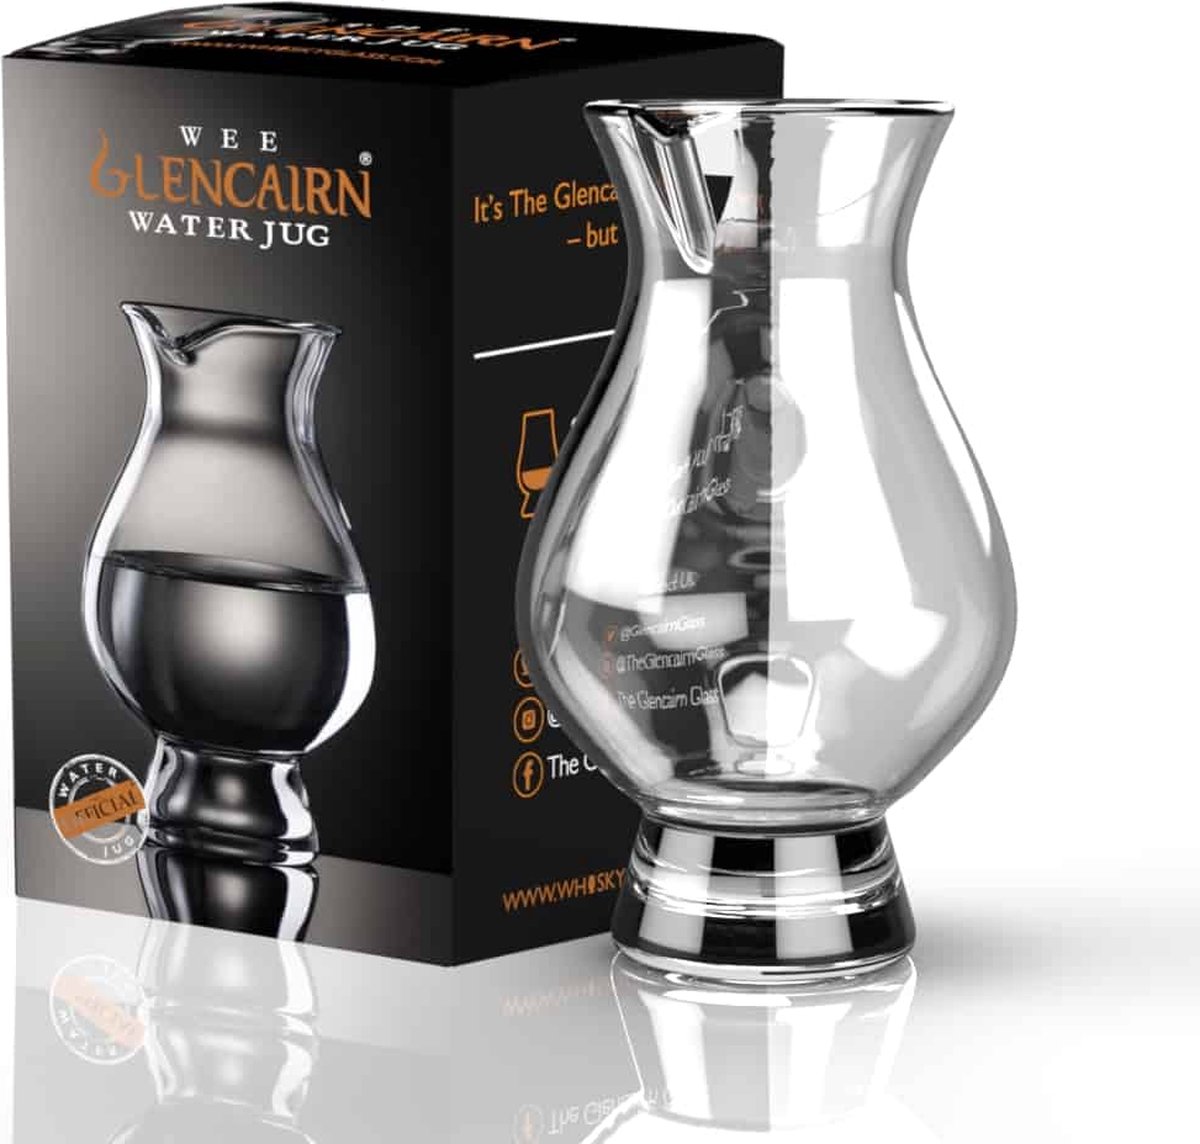 Glencairn WEE Water JUG - Cosmetic Glass - Made in Scotland